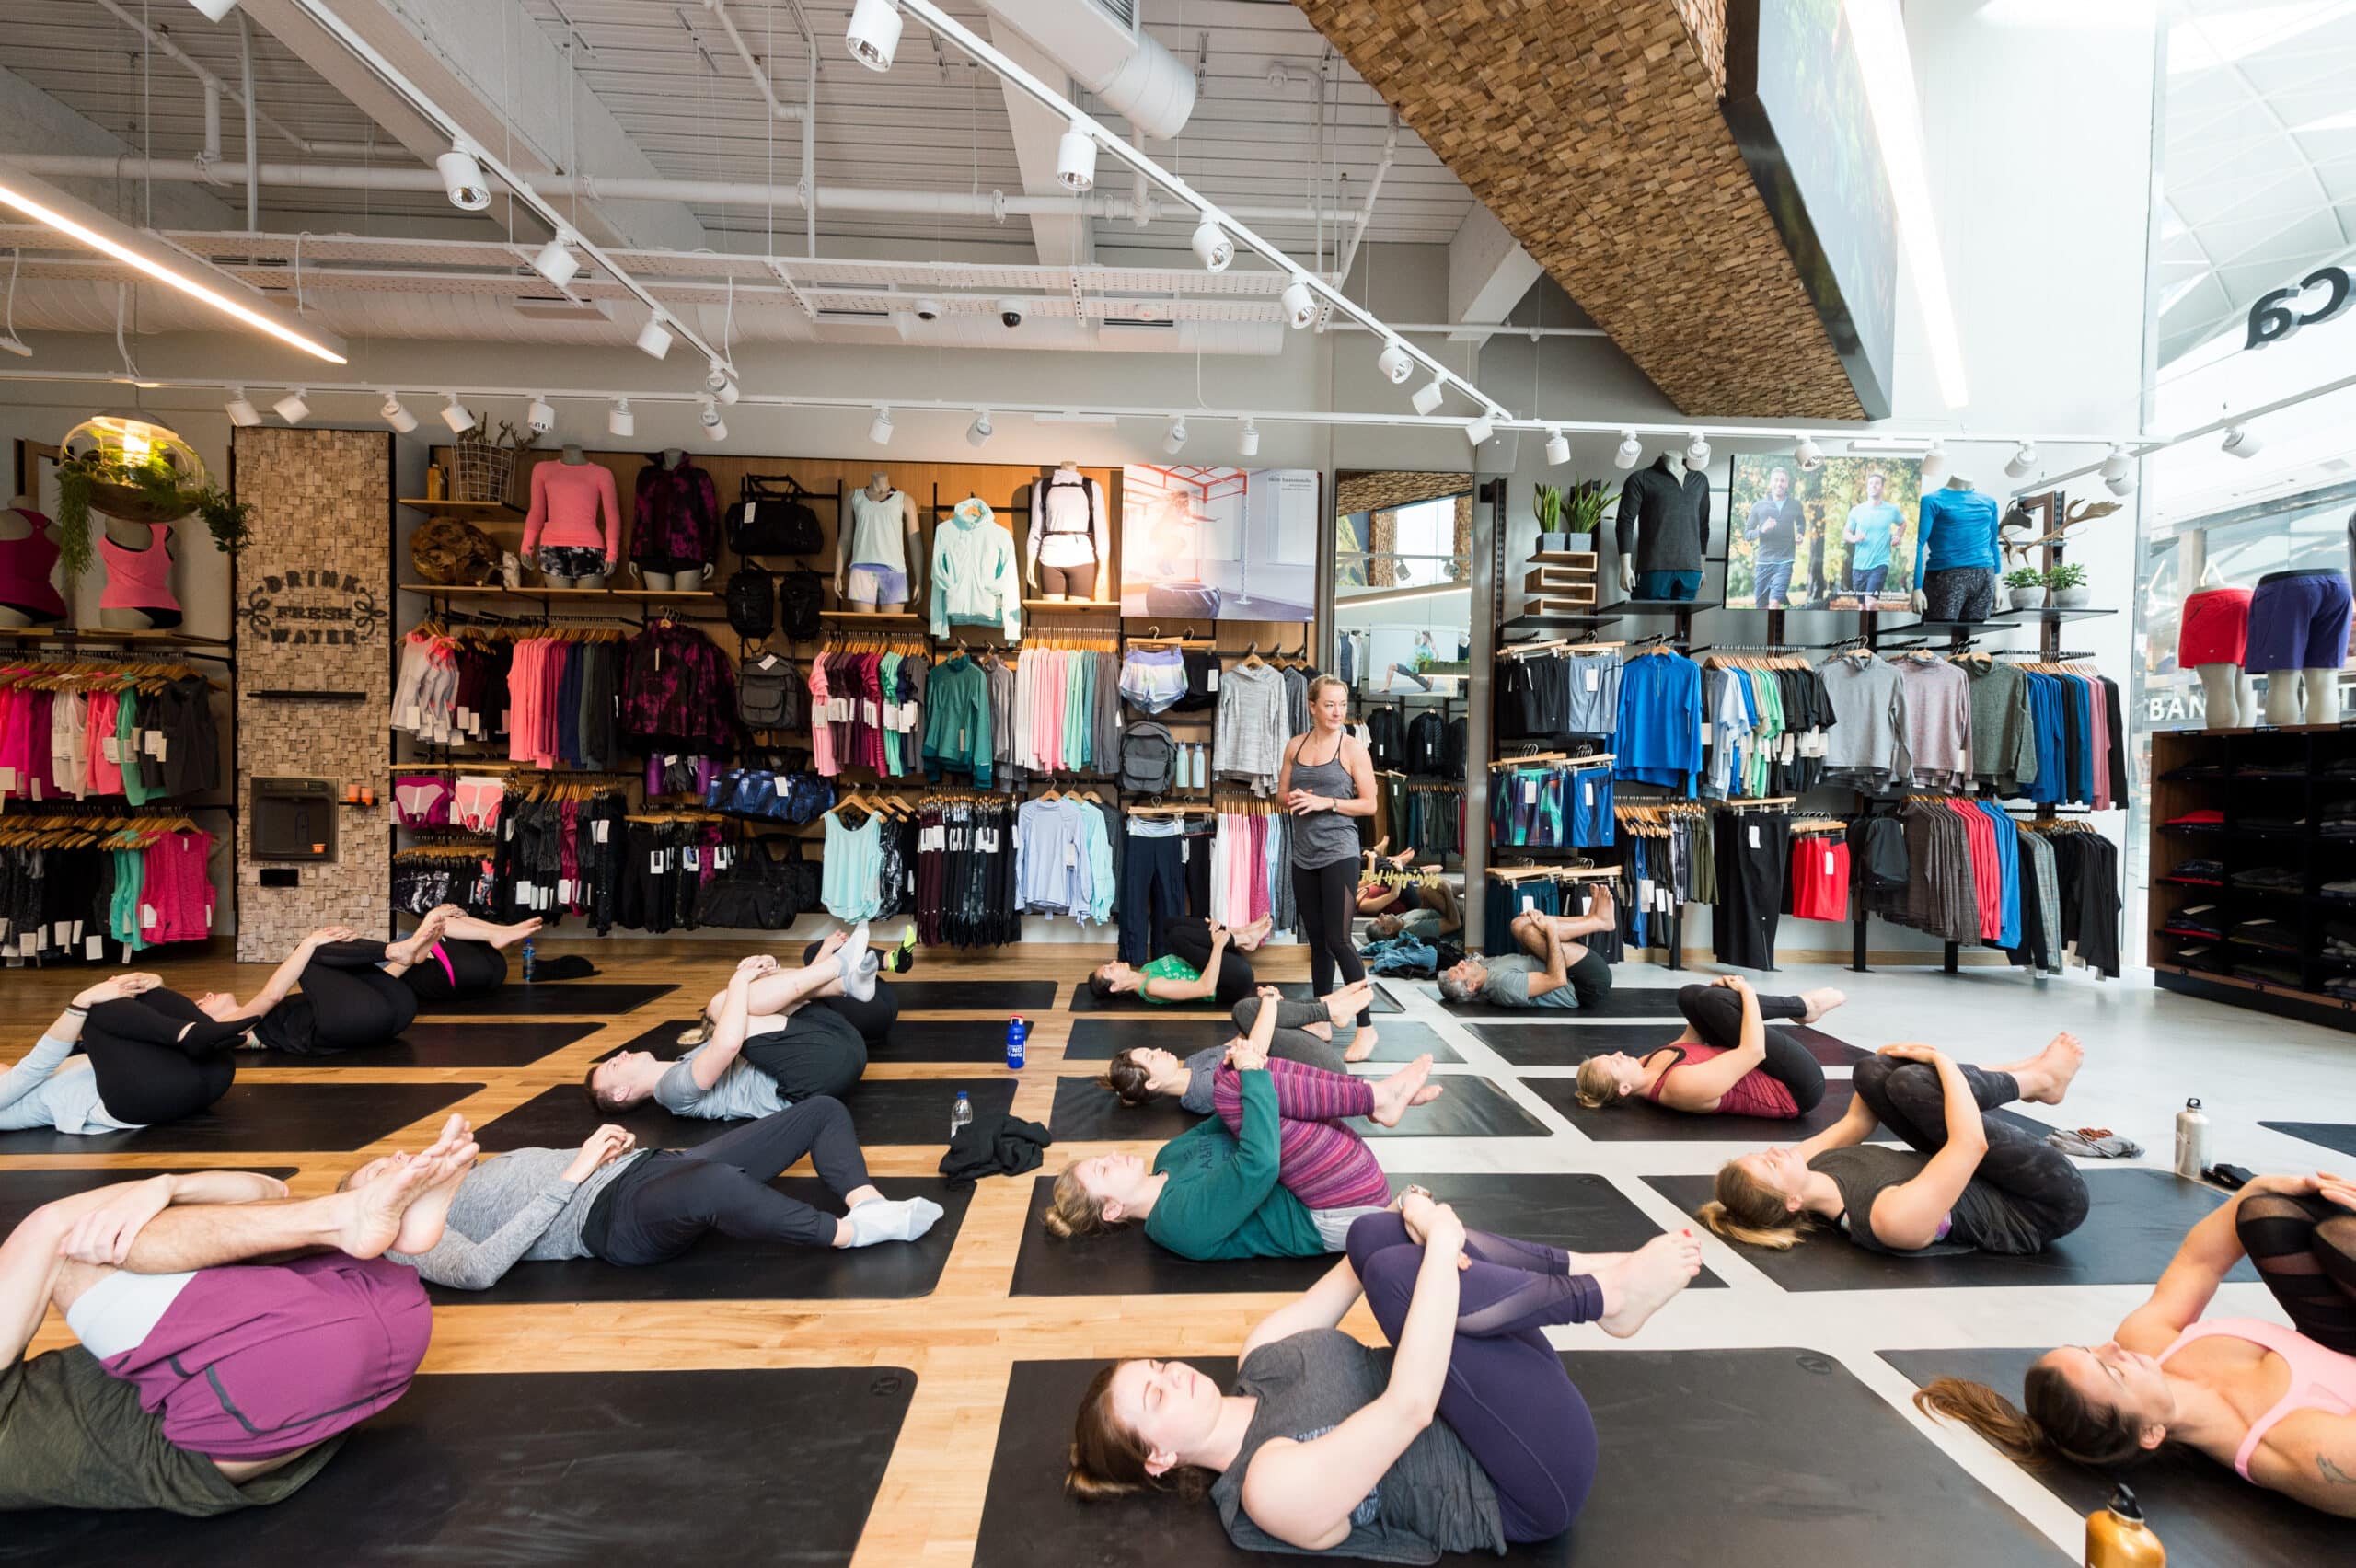 Lululemon case study: A retail experience built around yoga